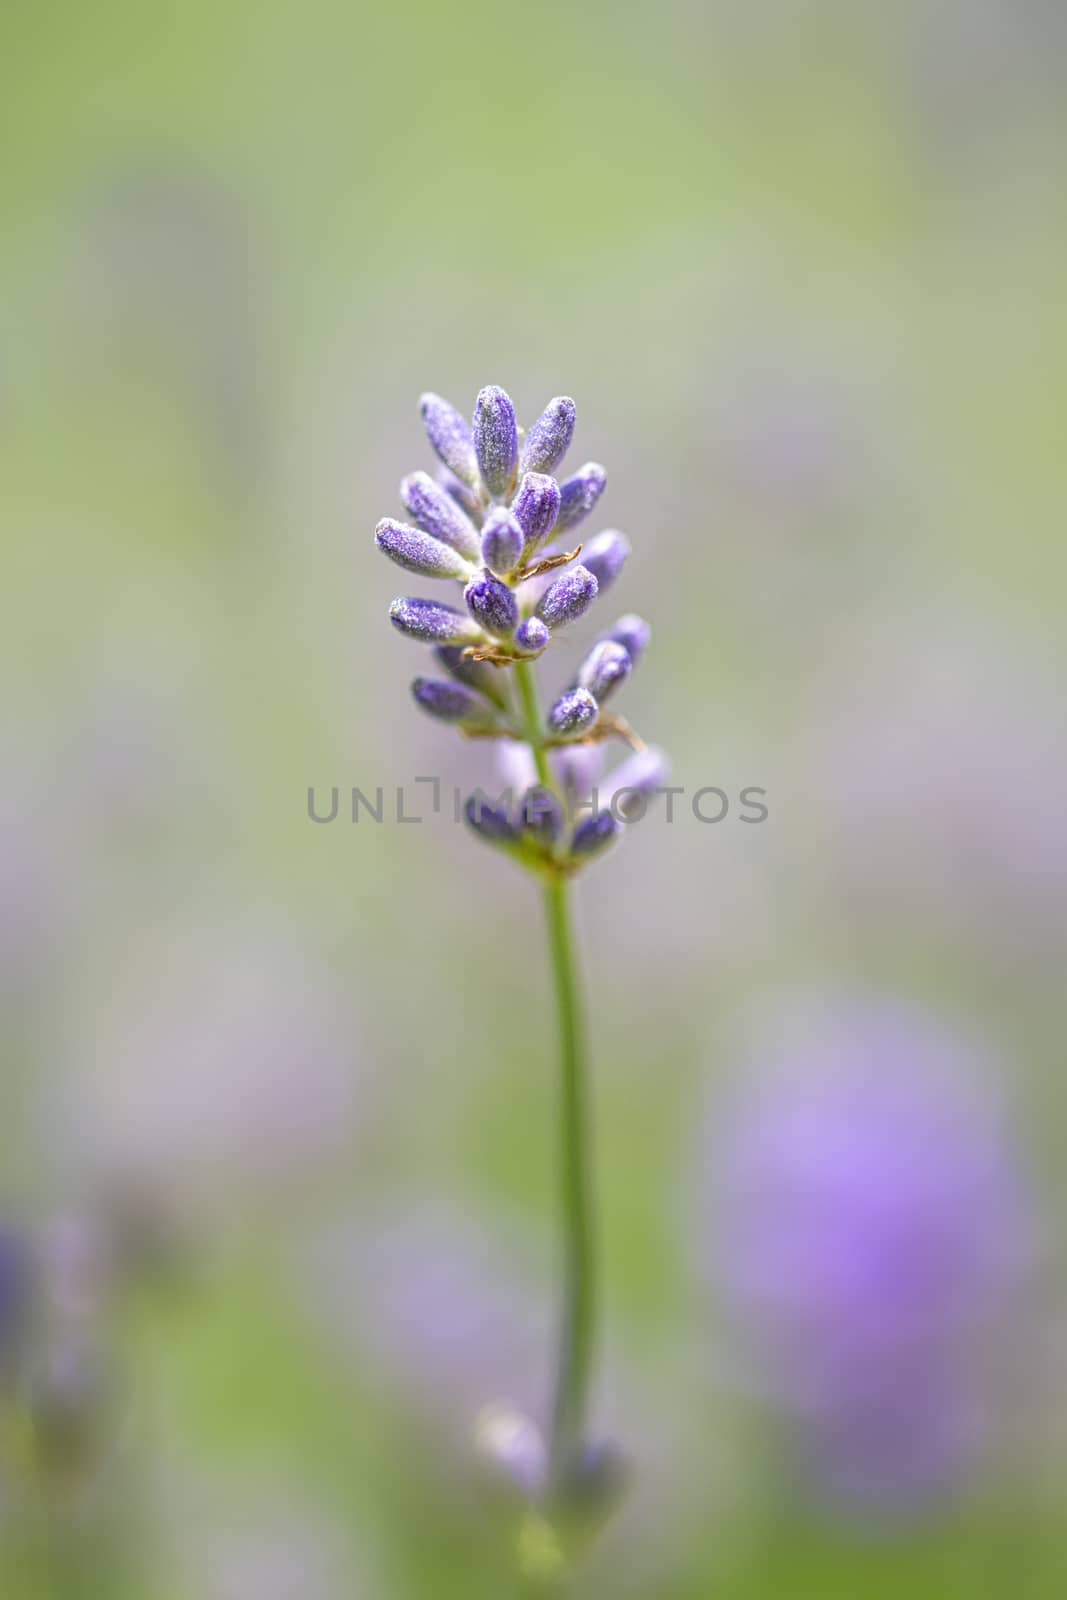 Lavender flower or blossom against a blur leaf and lavender background by ankorlight